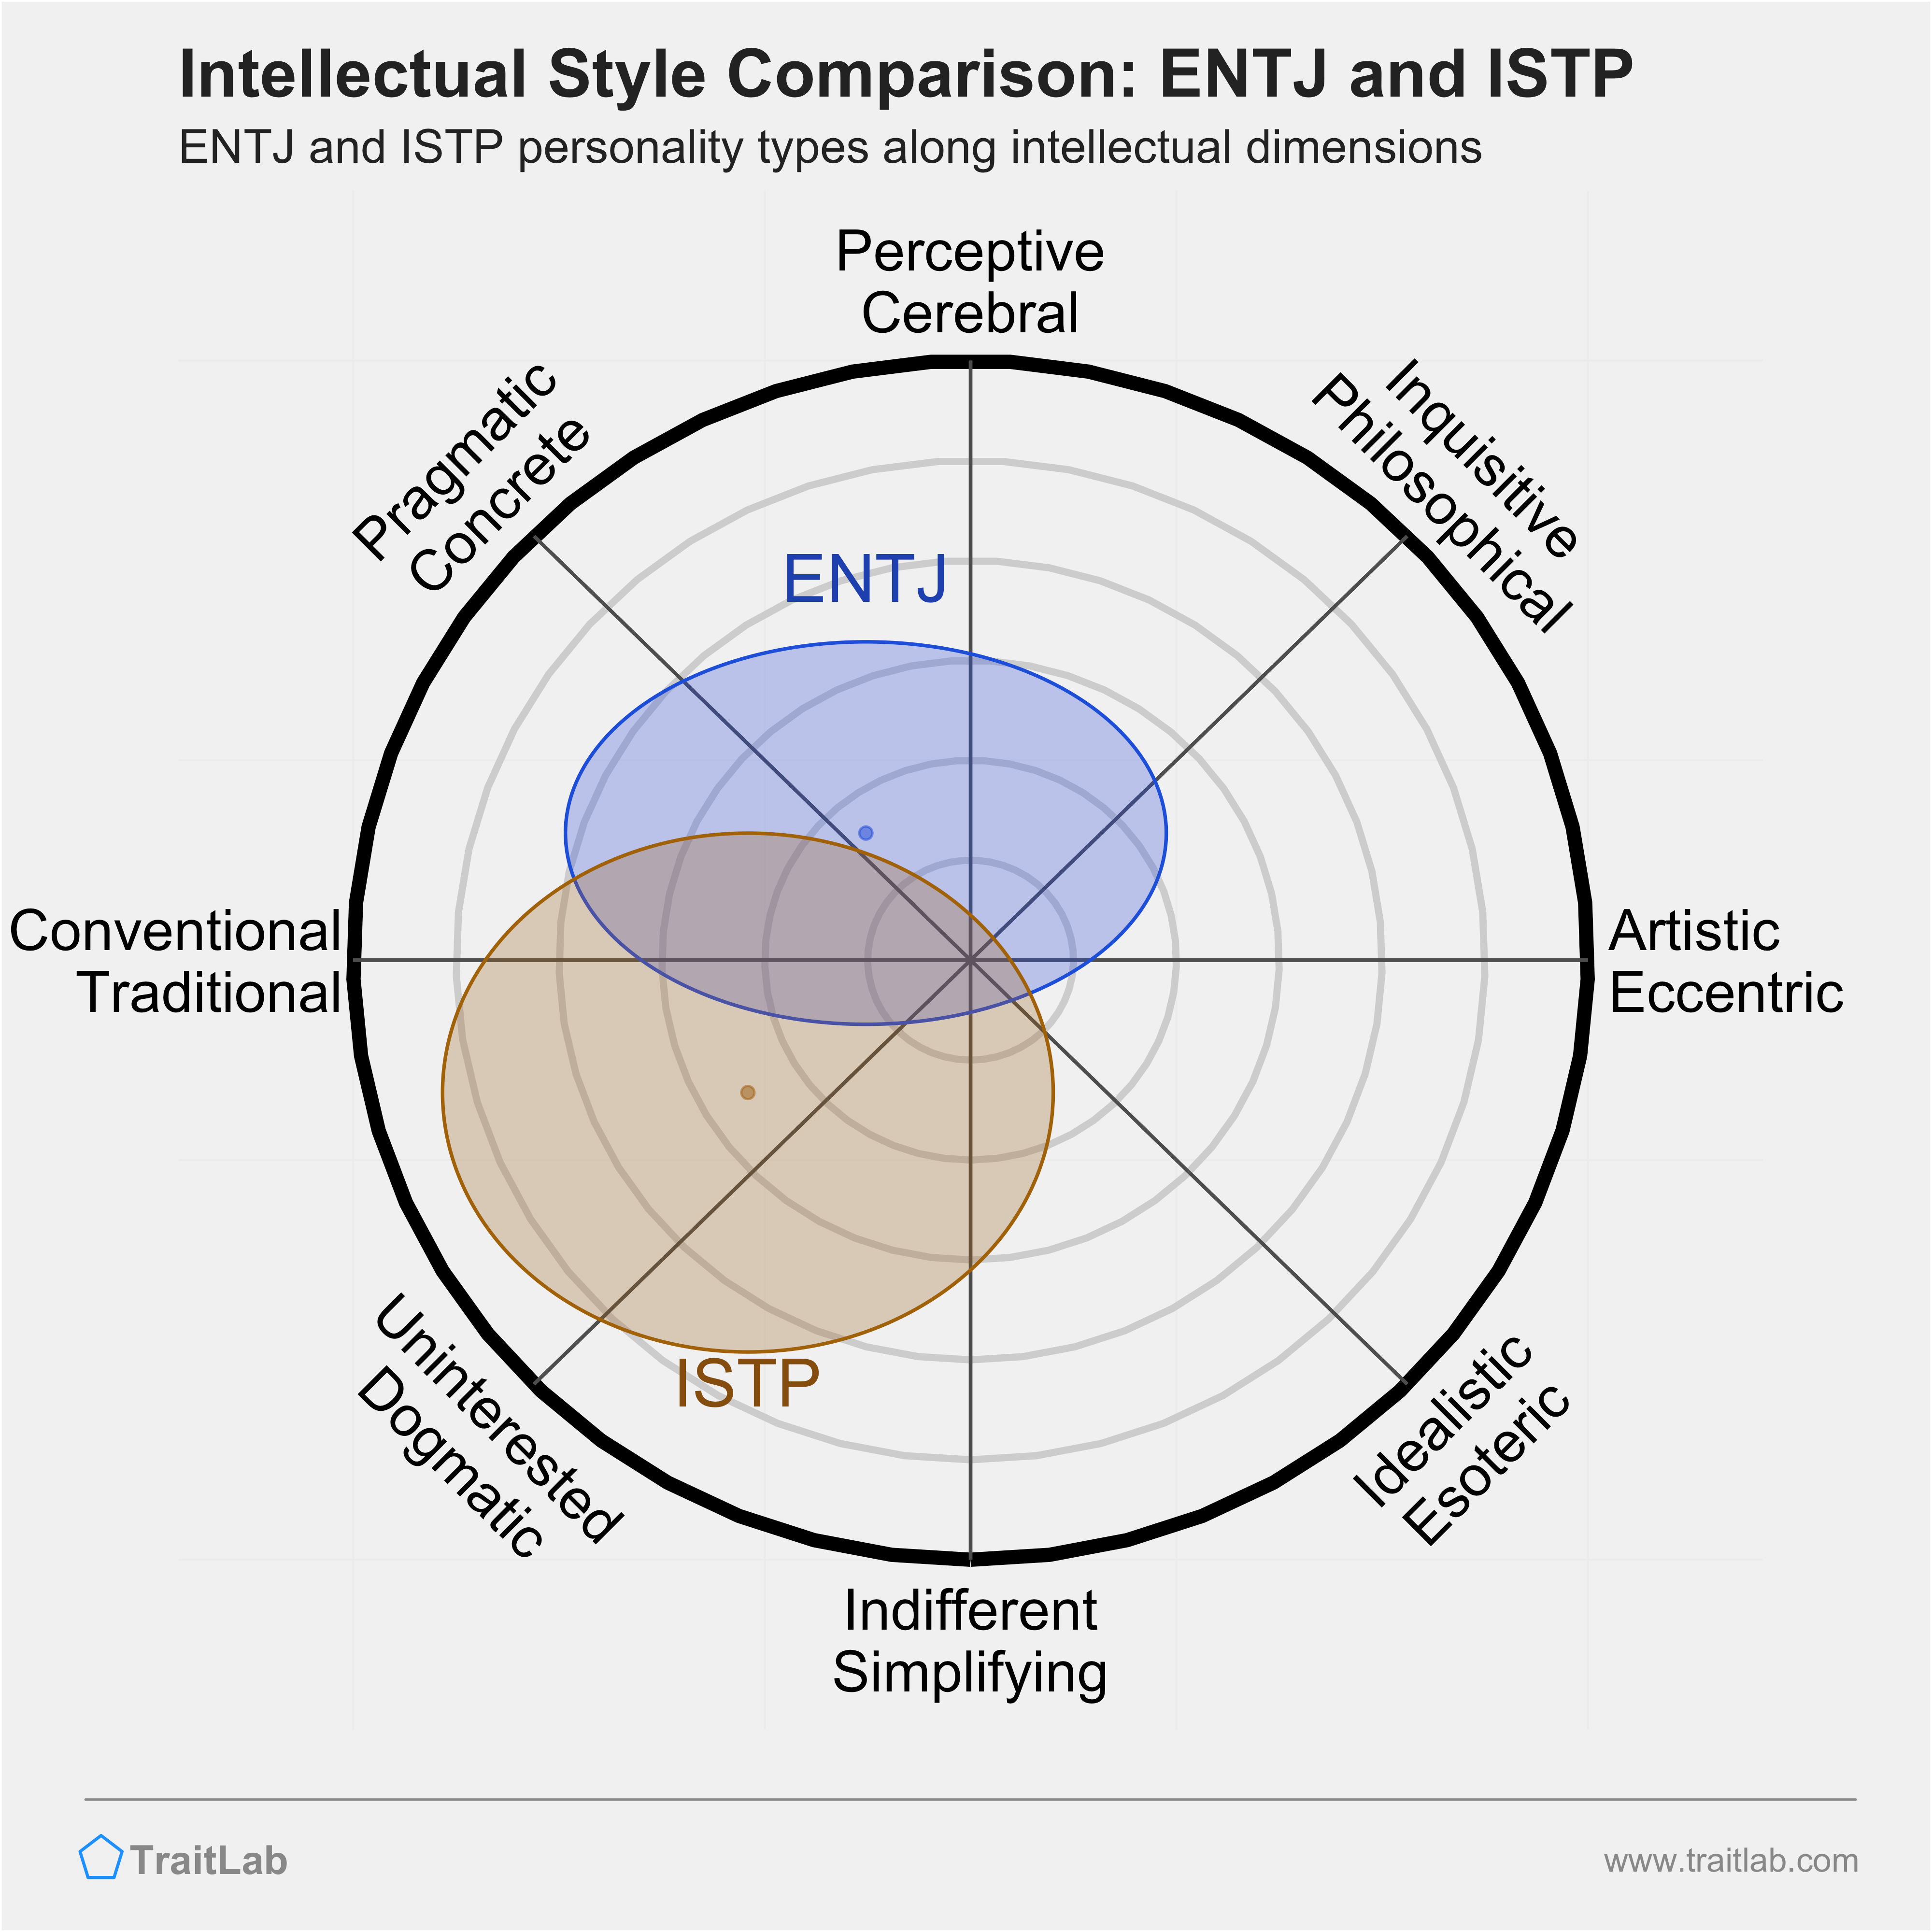 ENTJ and ISTP comparison across intellectual dimensions